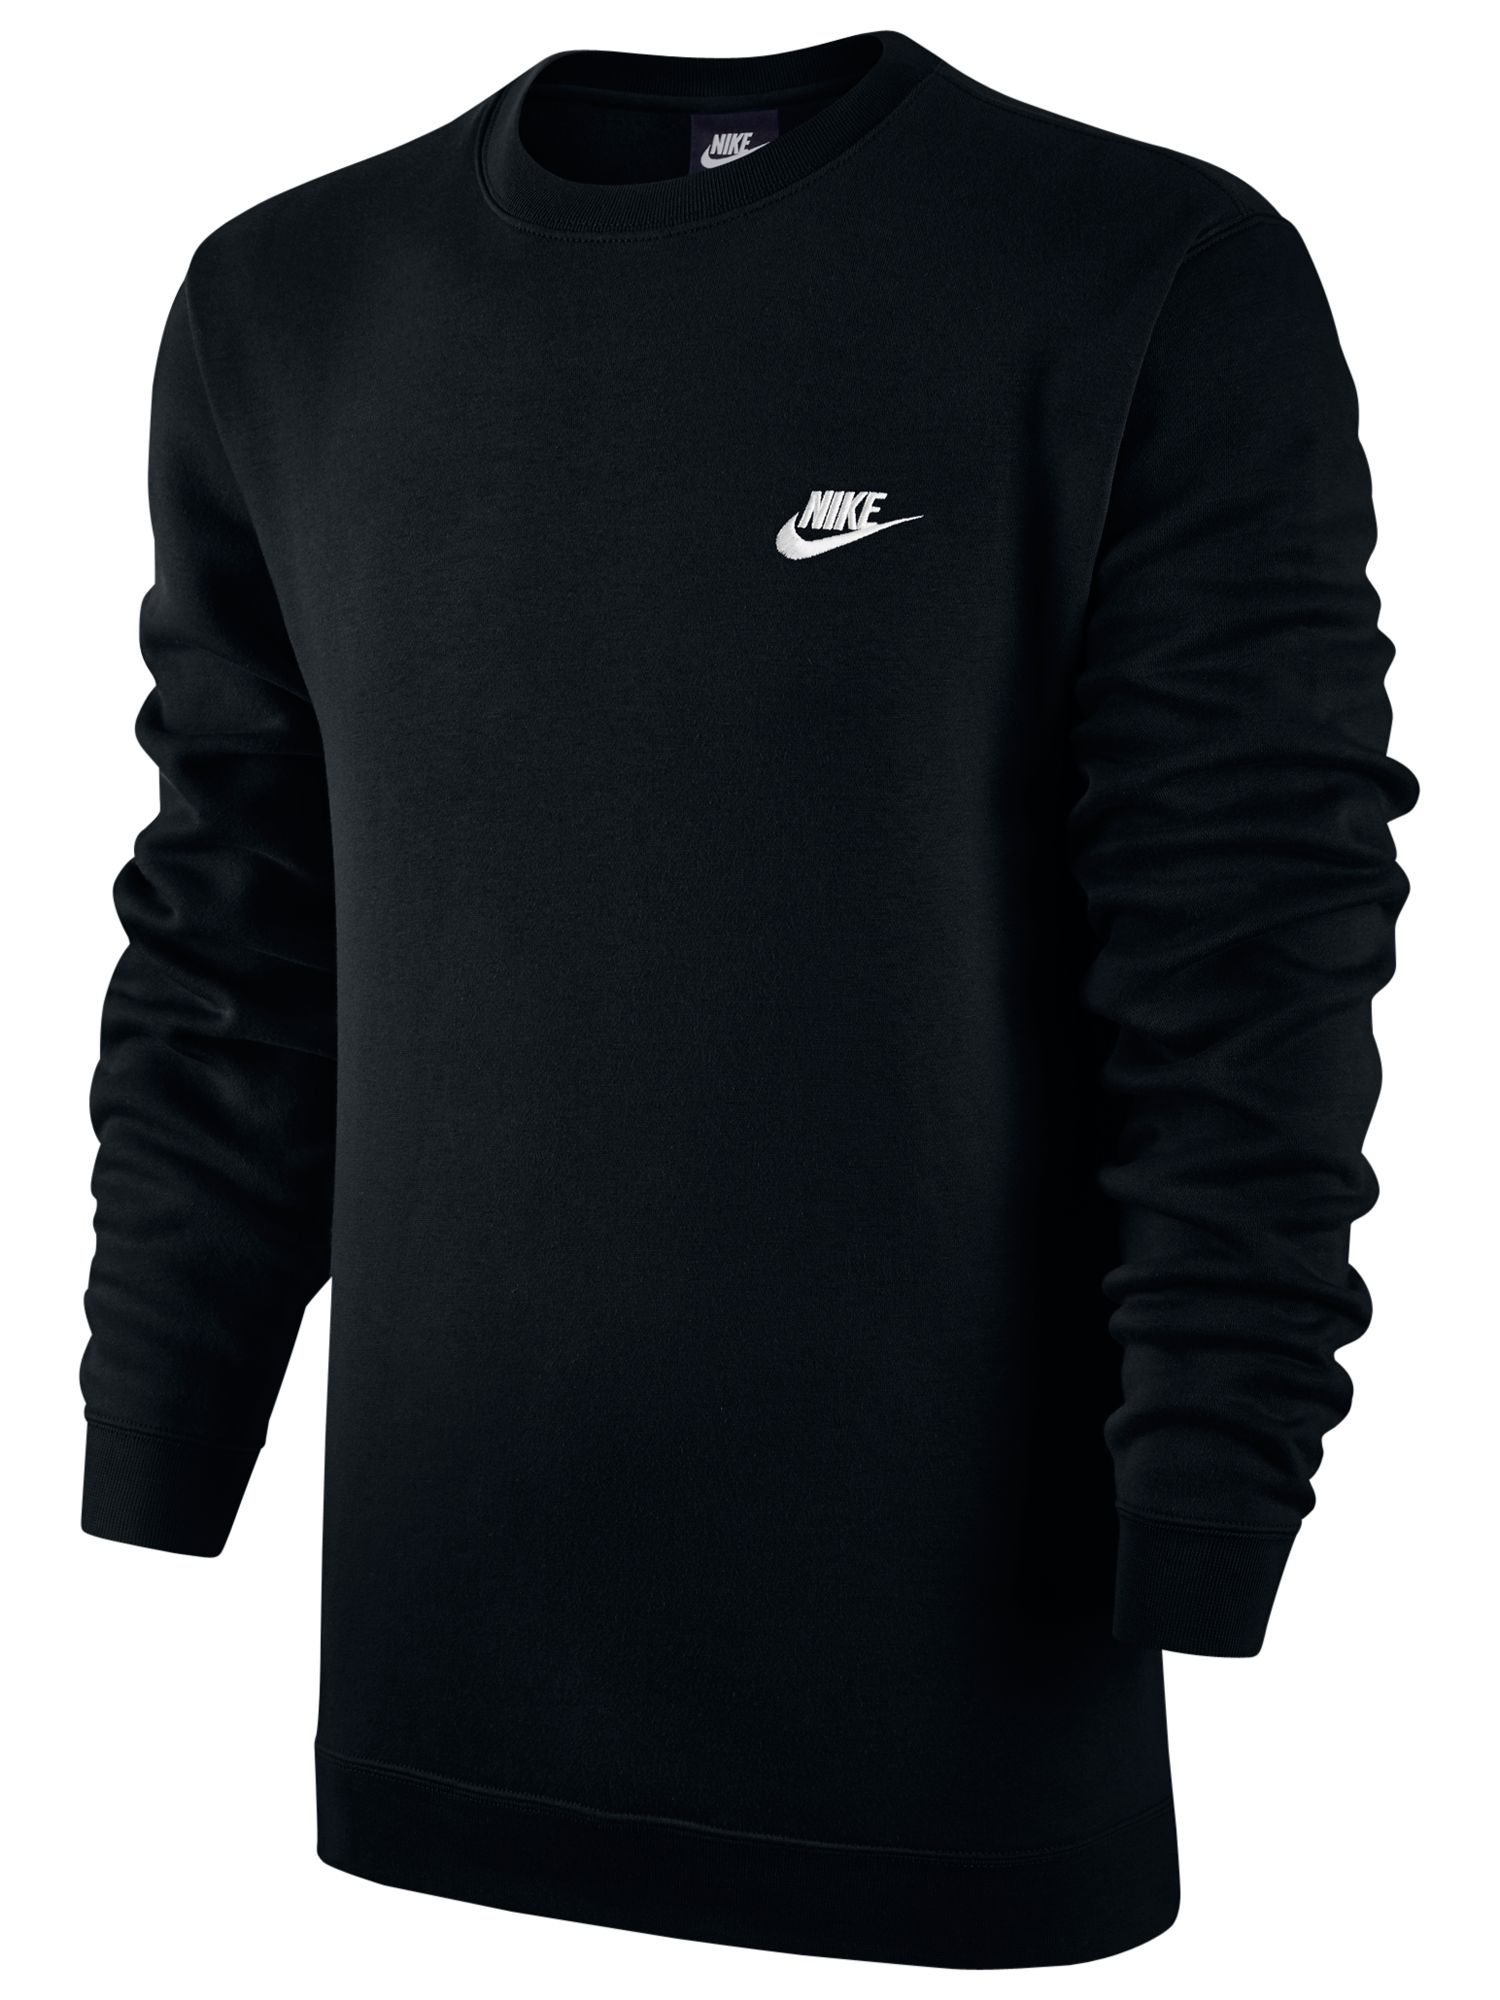 Nike Sportswear Crew Top, Black, XL